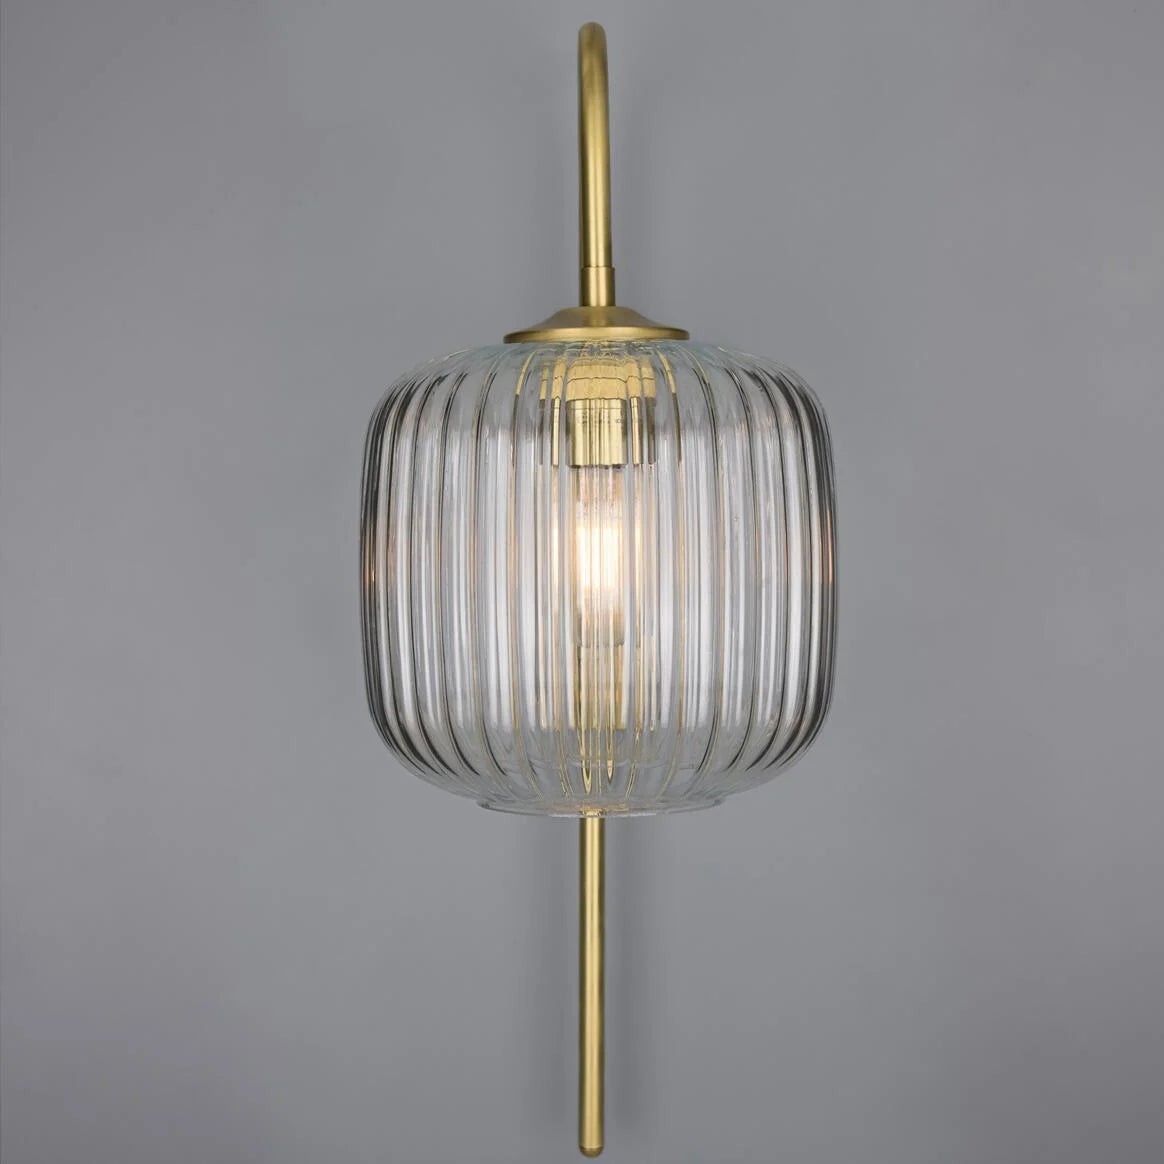 Astoria Reeded Glass and Brass Wall Light